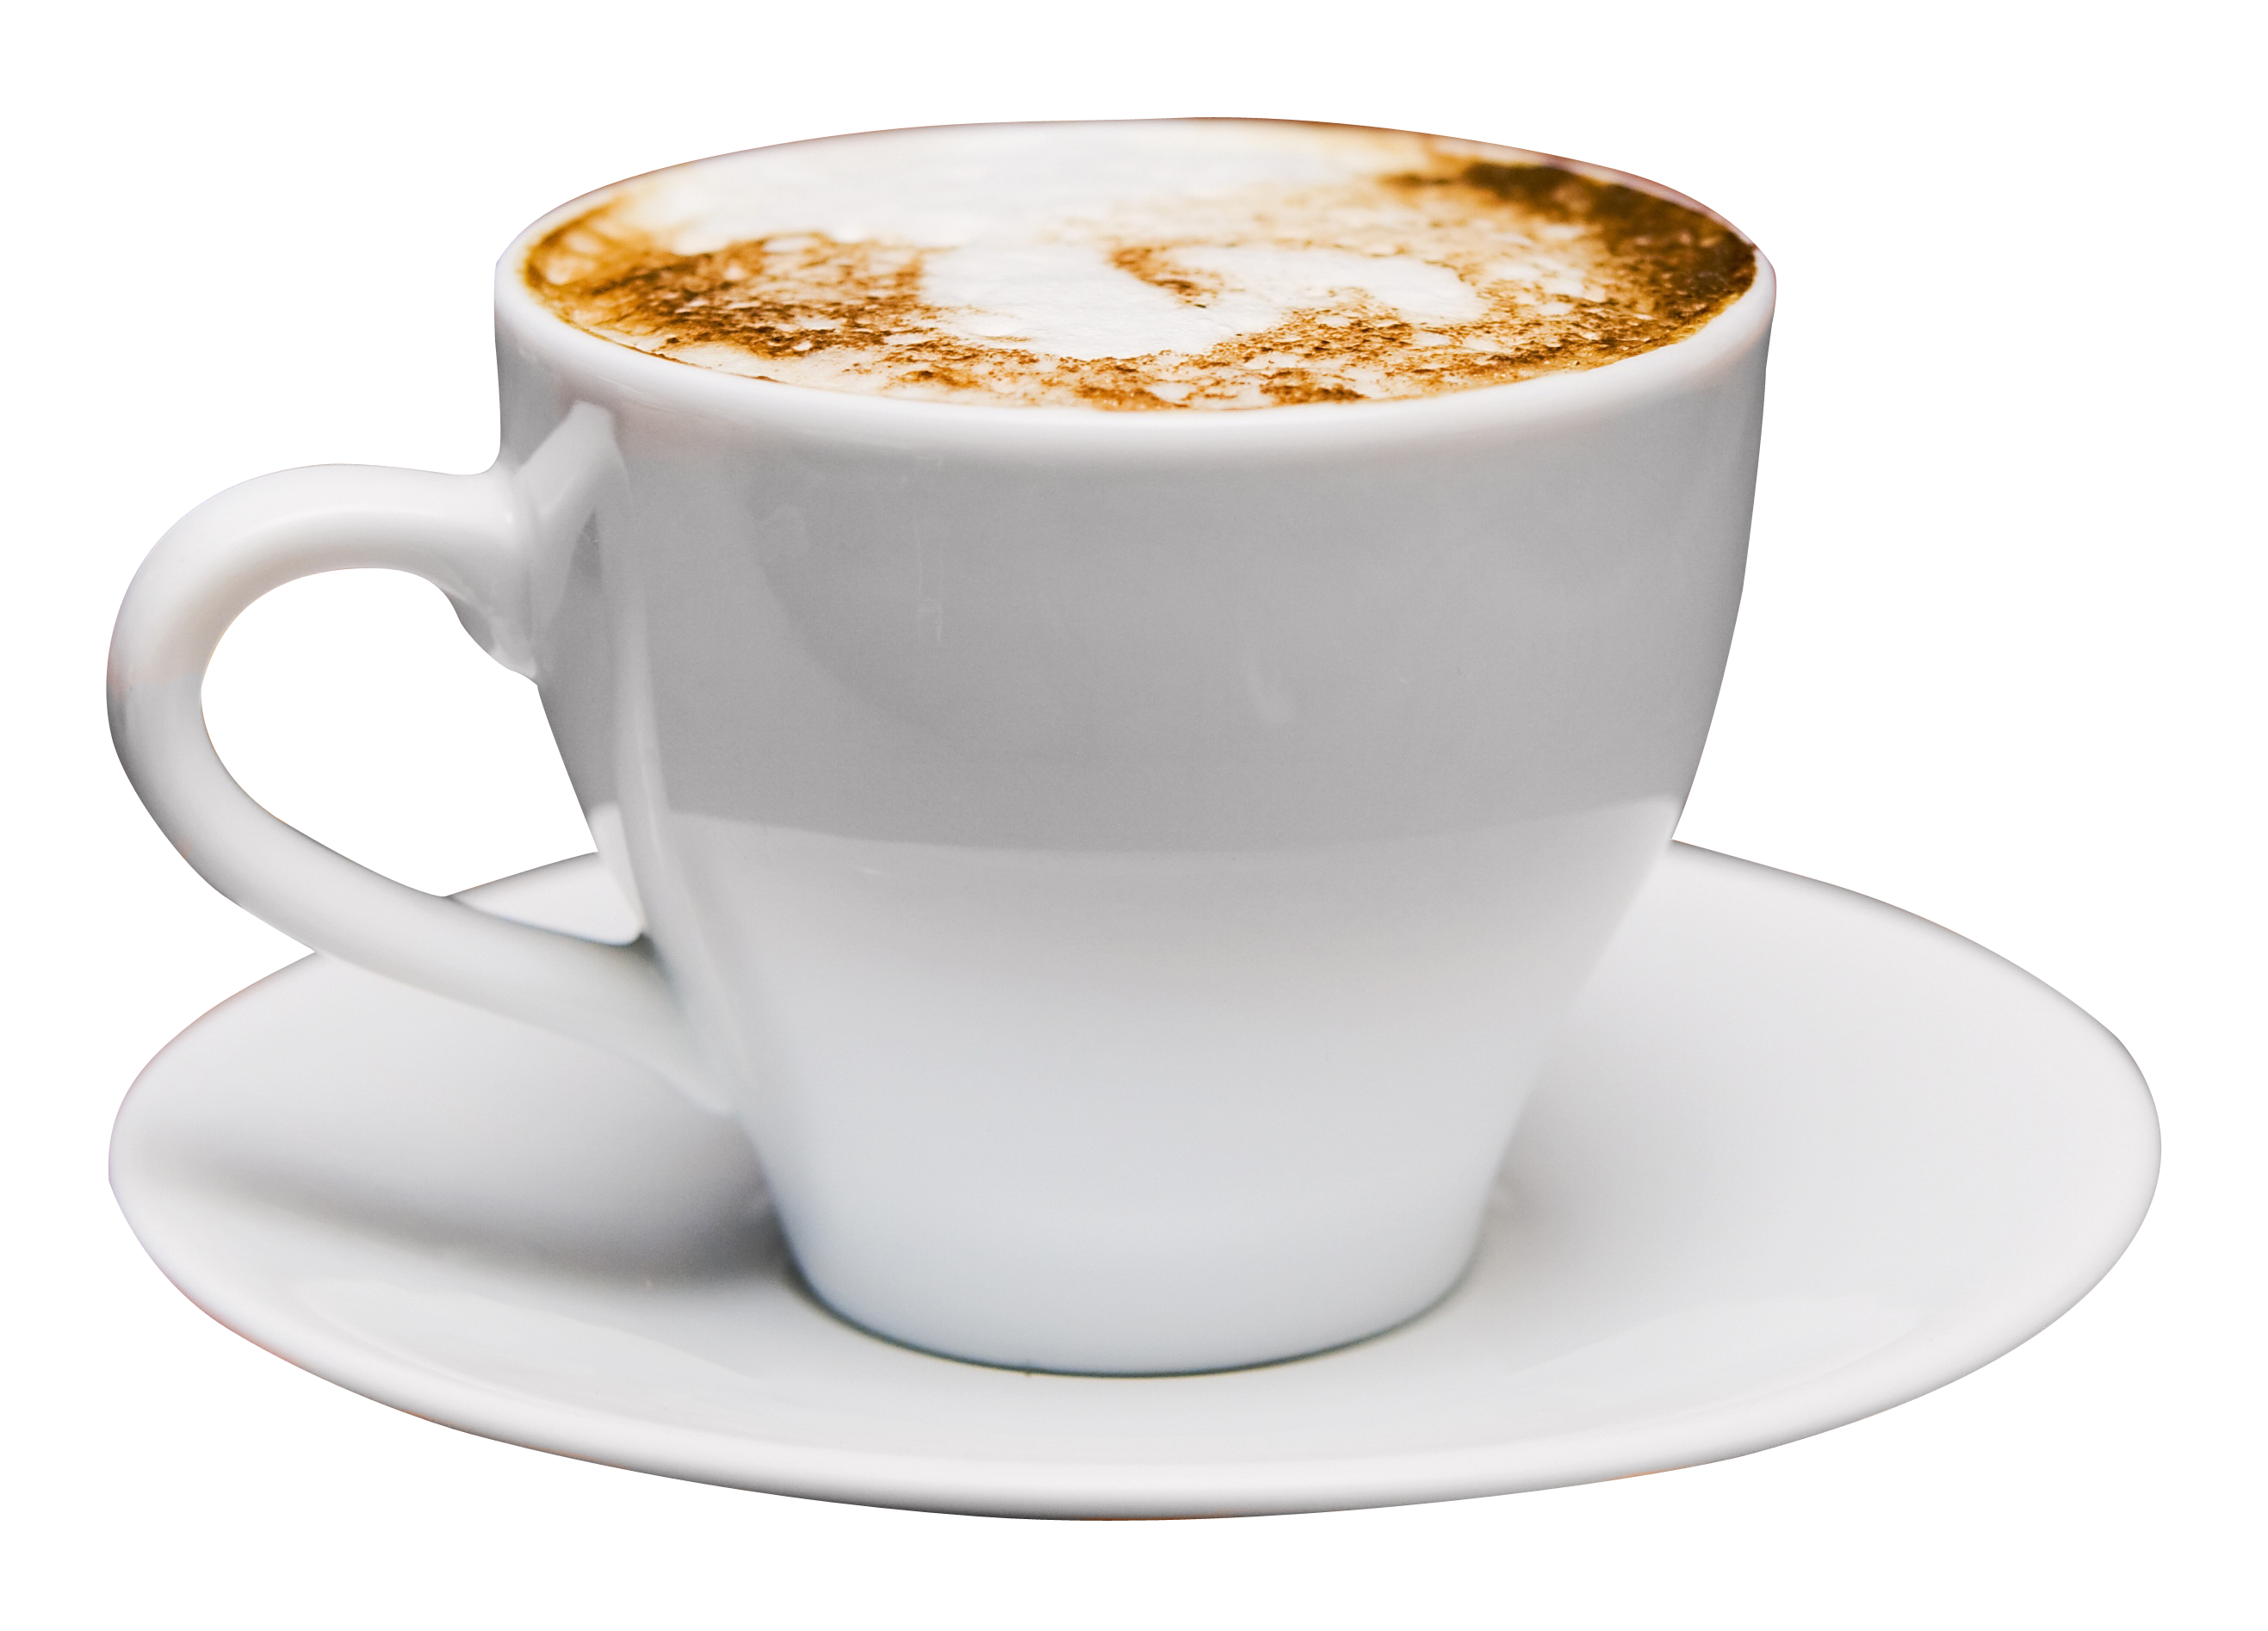 https://purepng.com/public/uploads/large/purepng.com-coffee-cupfood-objects-cup-coffee-mug-tea-caffeine-941524635605tpevl.png